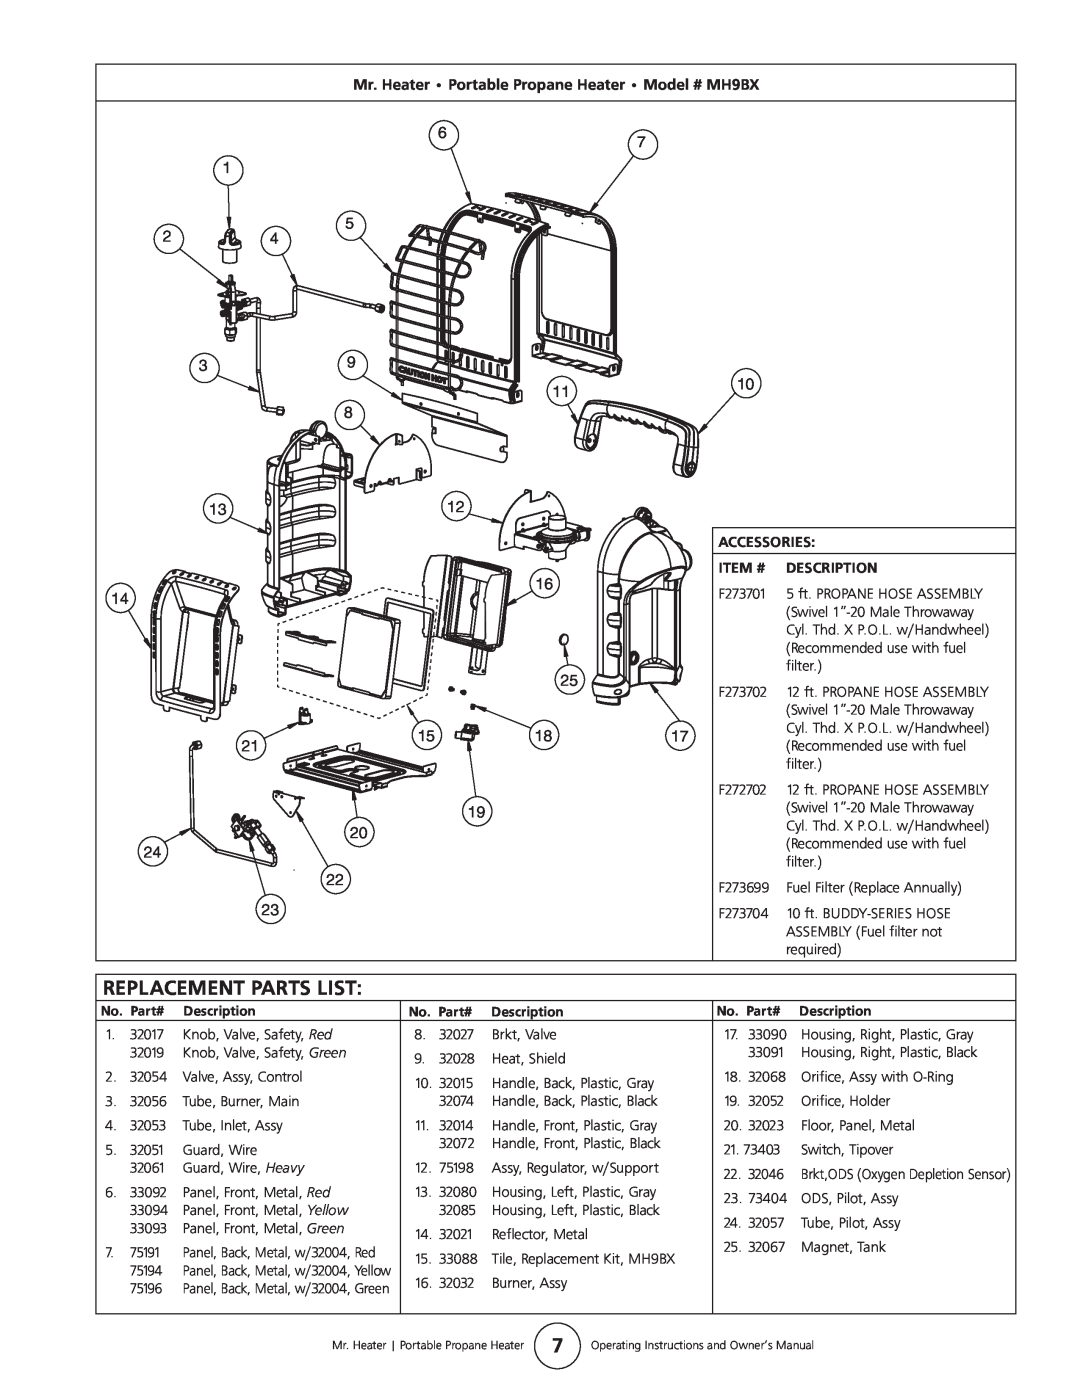 Mr. Heater Replacement Parts List, Mr. Heater Portable Propane Heater Model # MH9BX, Accessories Item # Description 